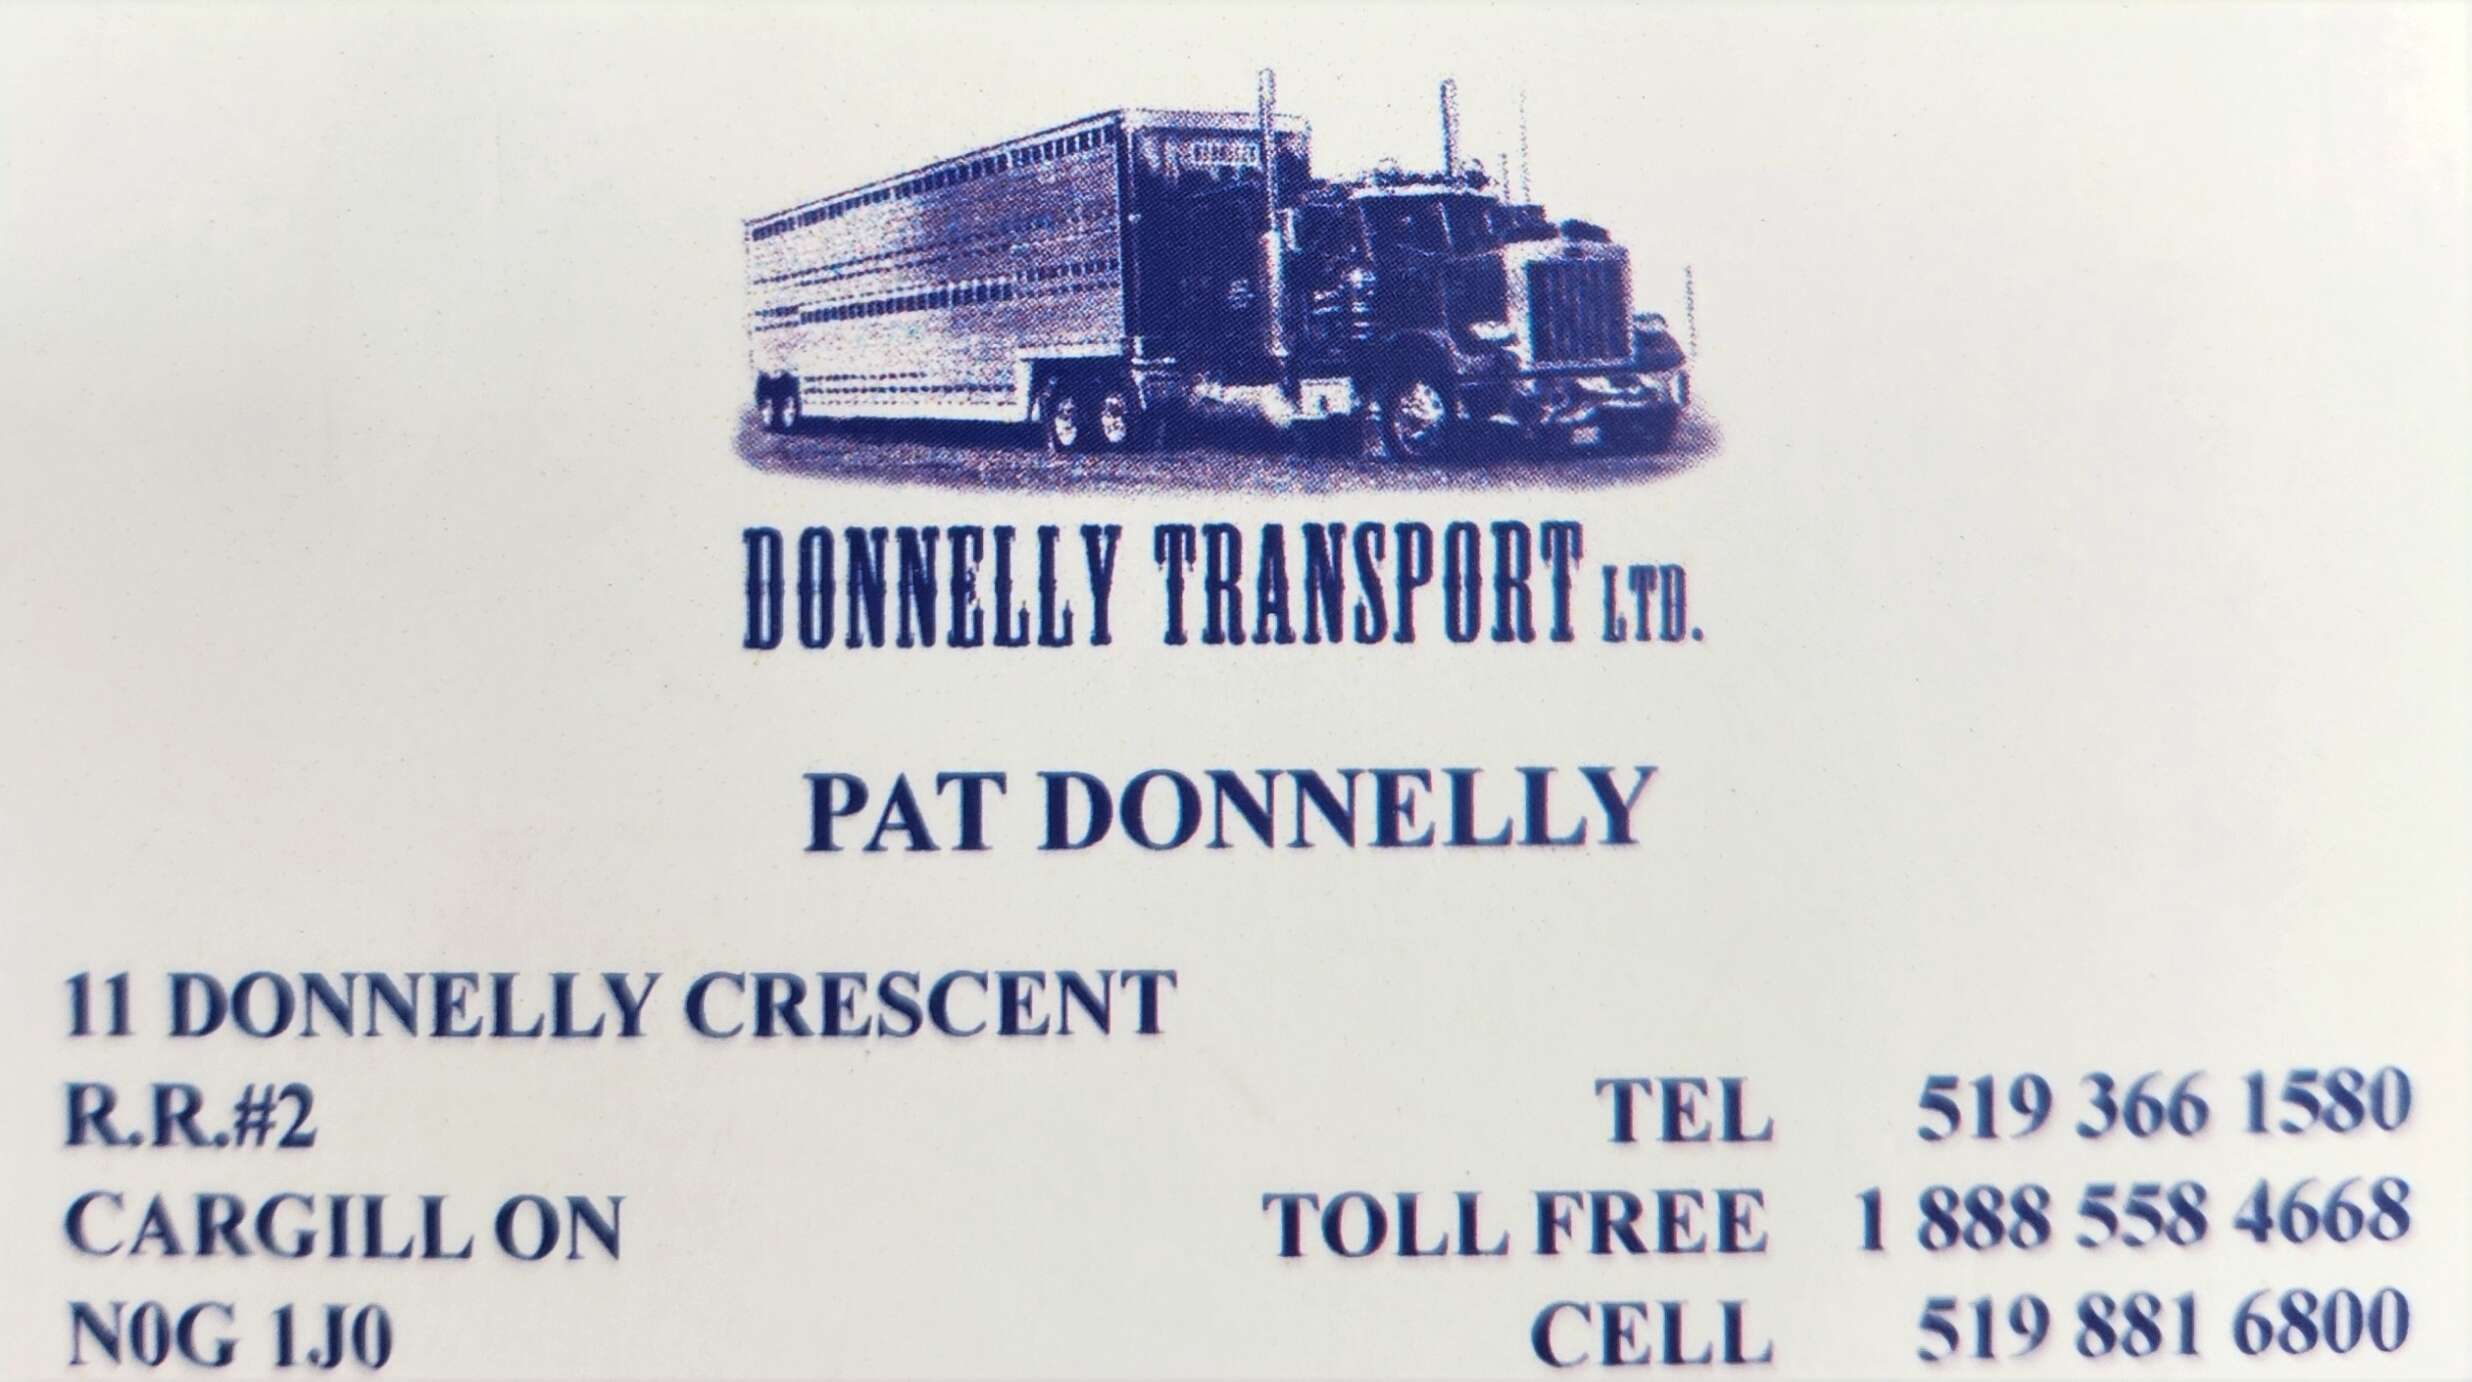 Donnelly Transport Ltd.